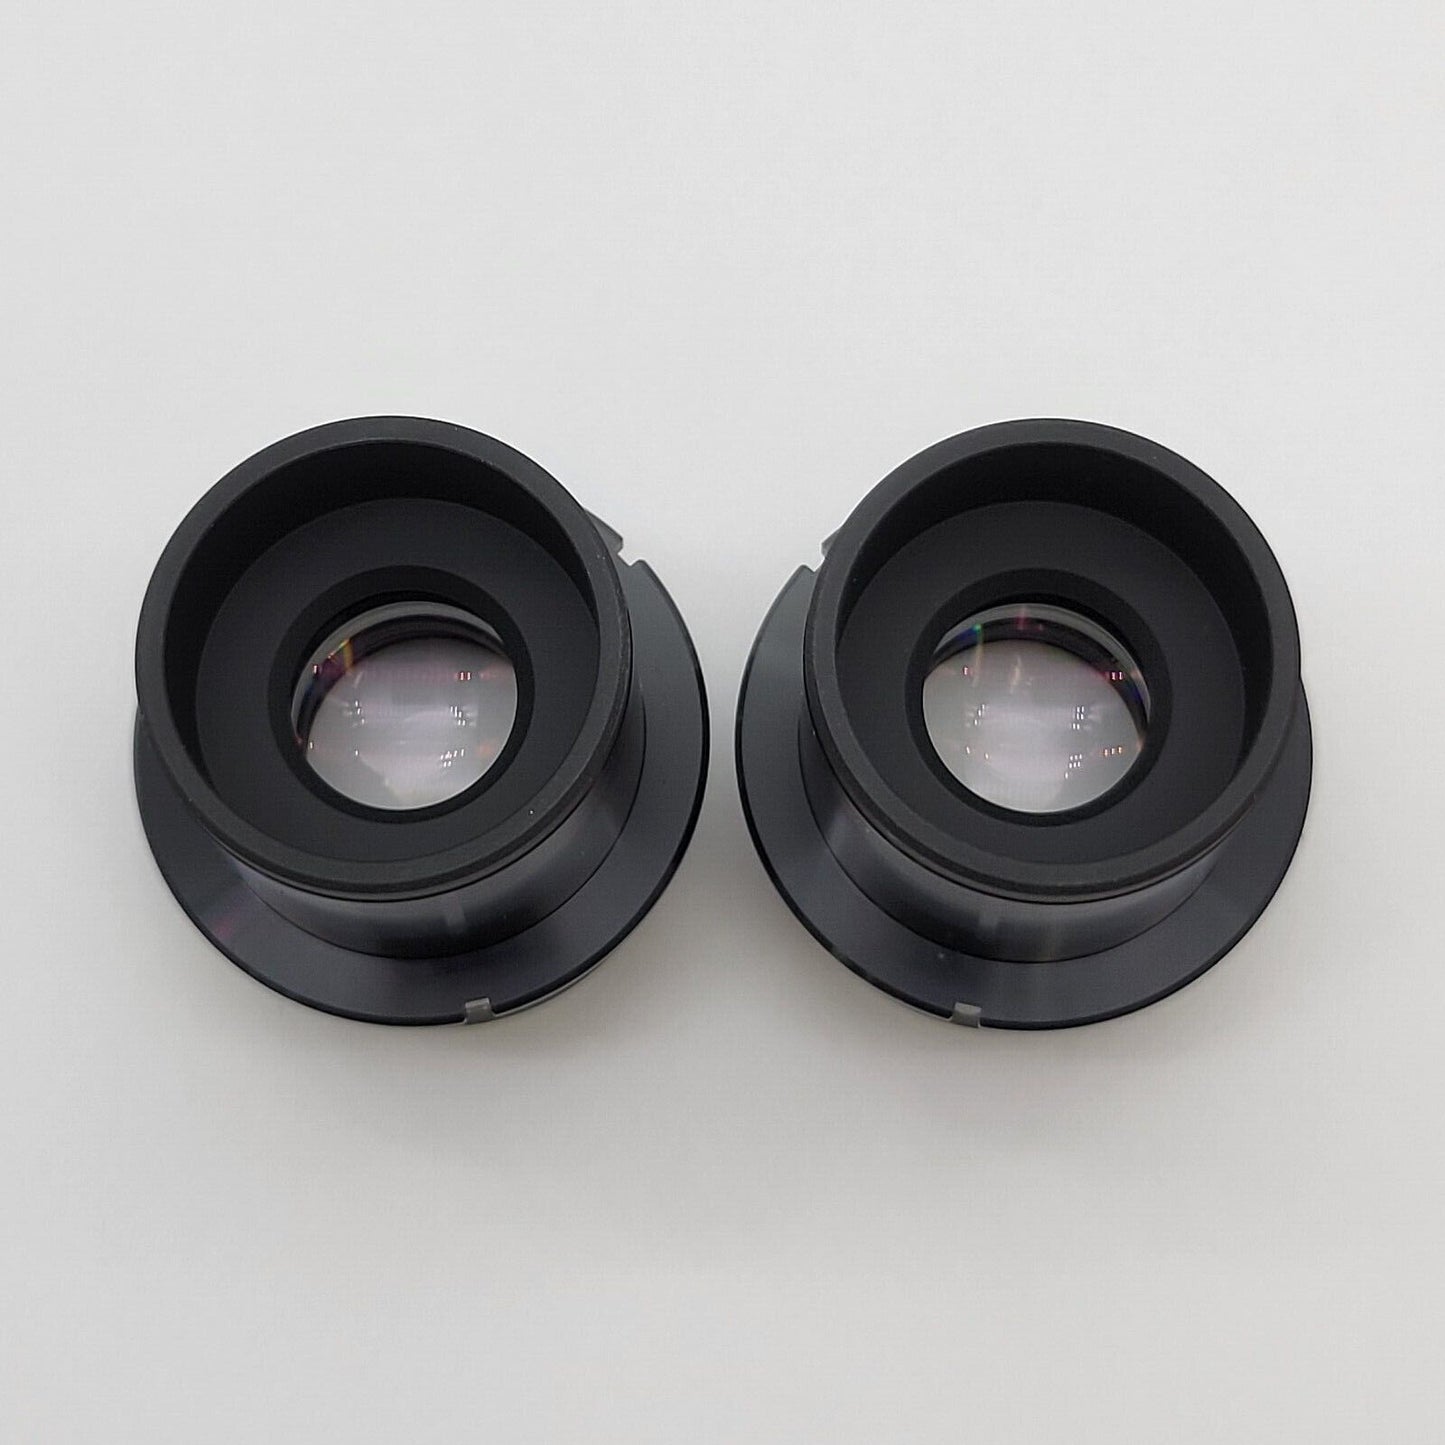 Nikon Microscope Eyepiece Pair CFI 15x/14.5  15x Eyepieces - microscopemarketplace